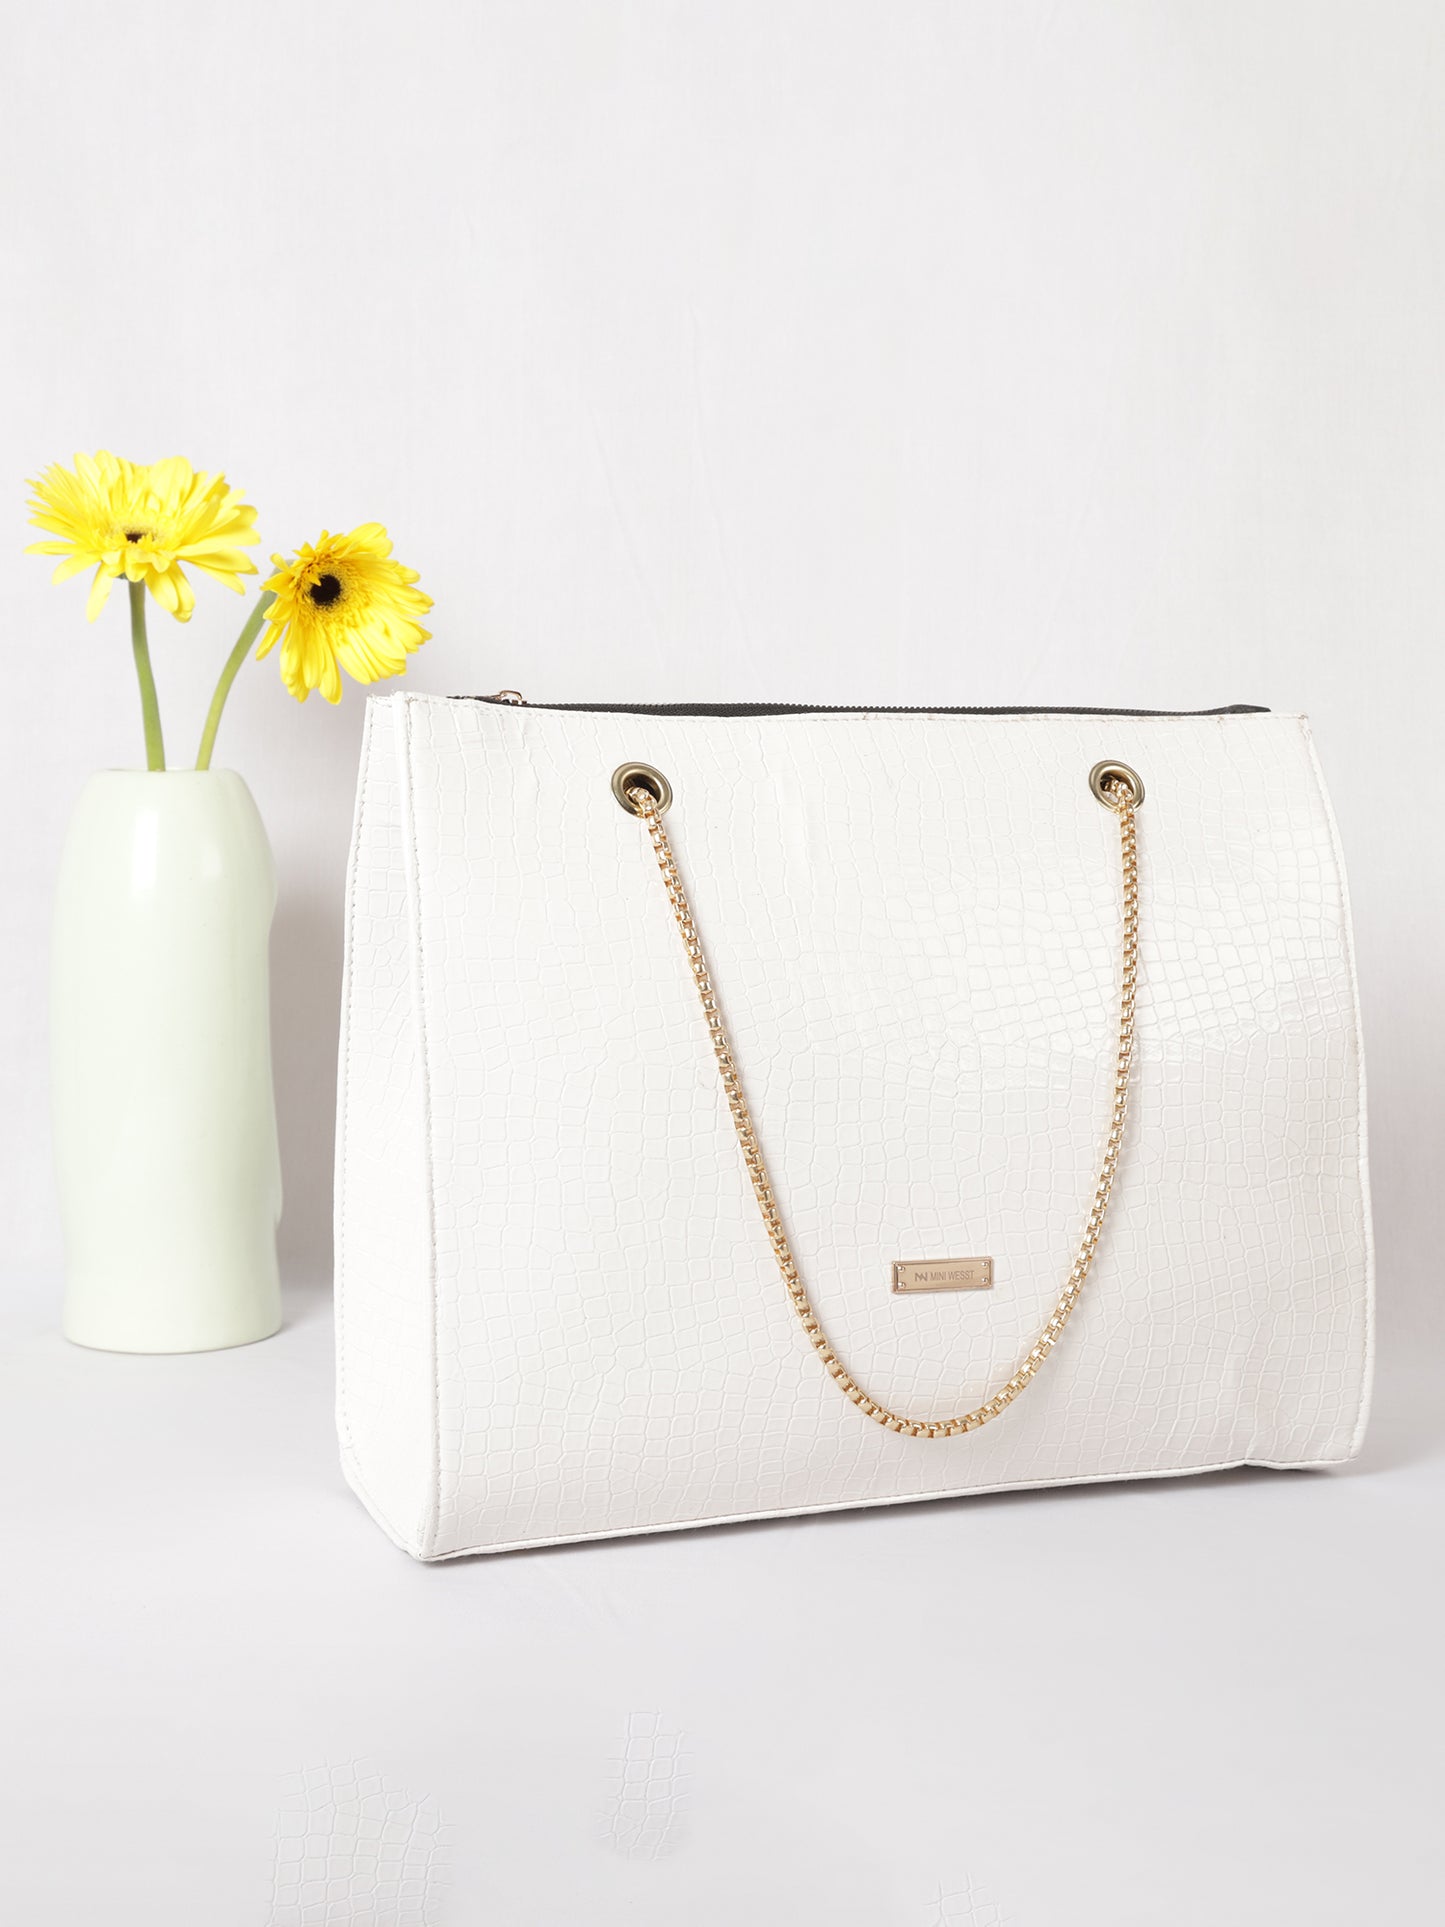 MINI WESST Women's White Handbag  and Pouch(MWTB008WT)